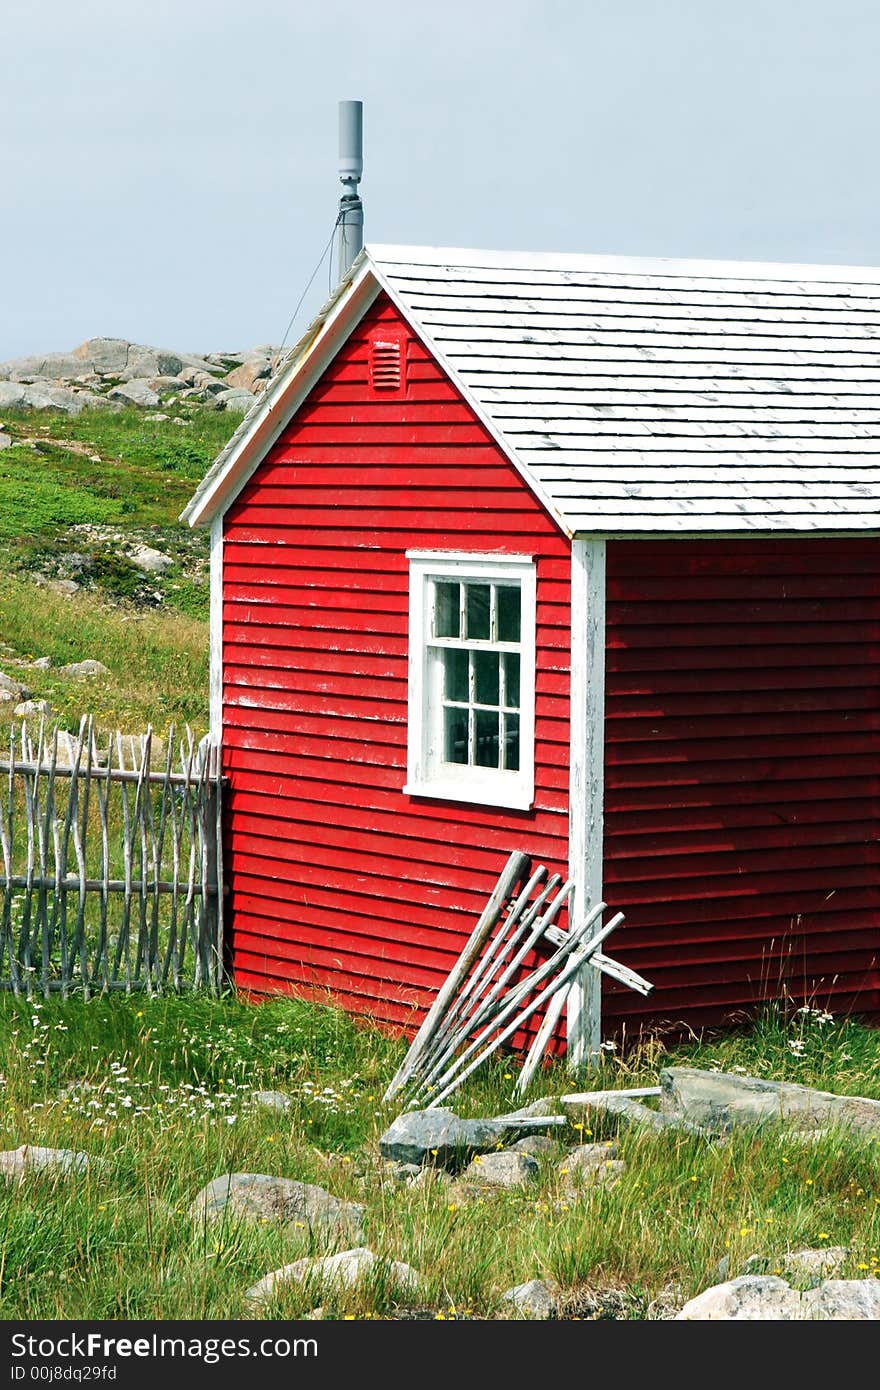 Rustic red building on the Bonavista Lighthouse grounds in Newfoundland, Nova Scotia, Canada - travel and tourism.